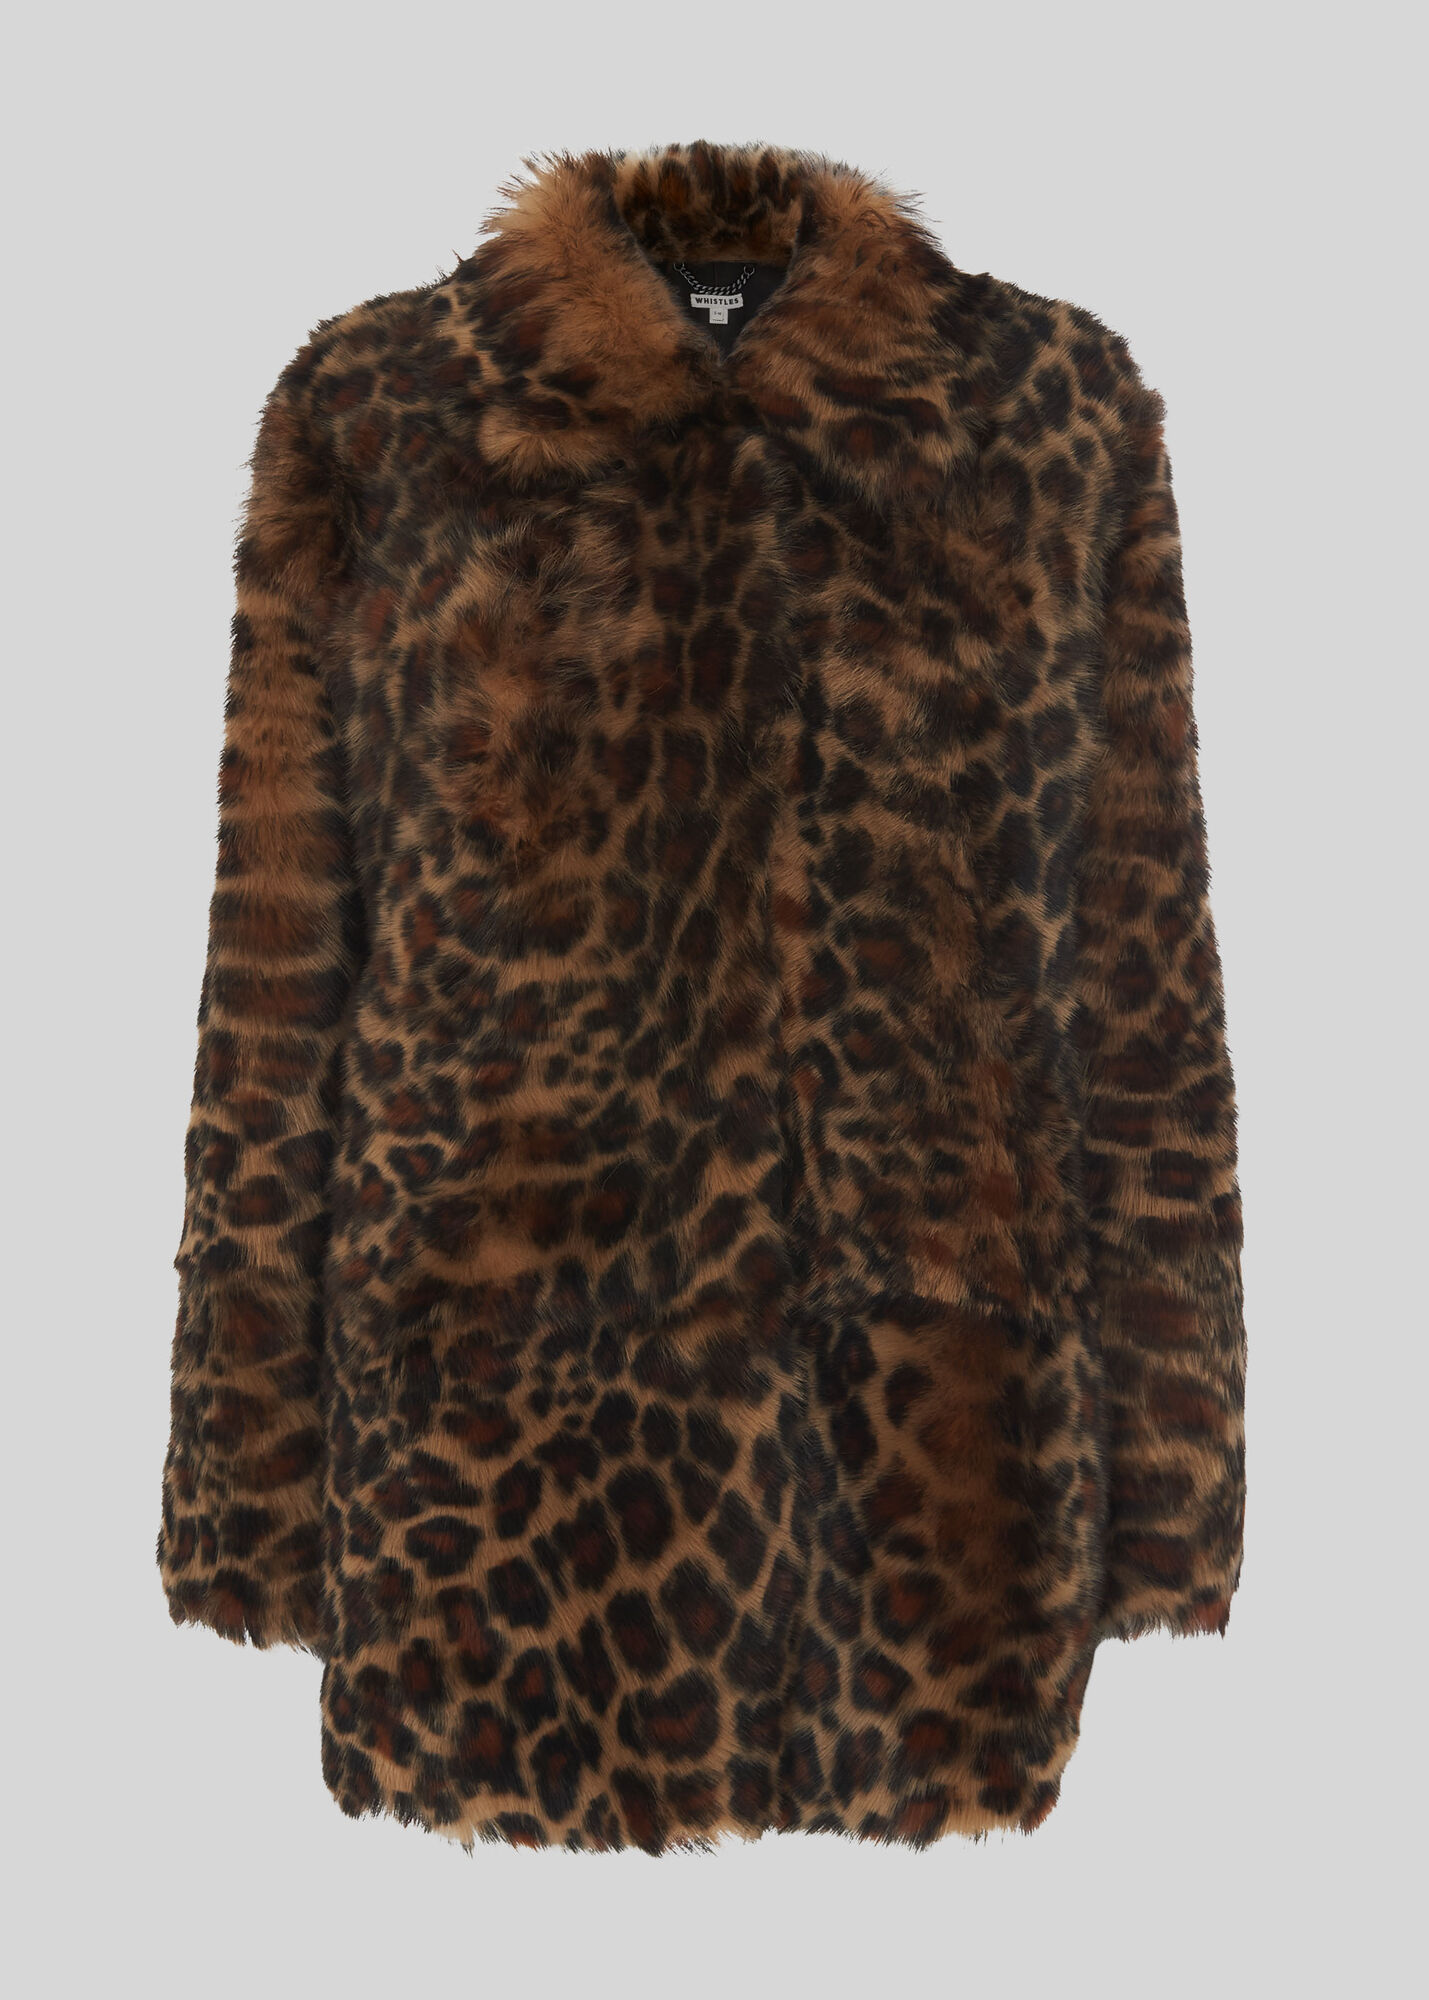 Leopard Print Animal Alba Shearling Coat | WHISTLES